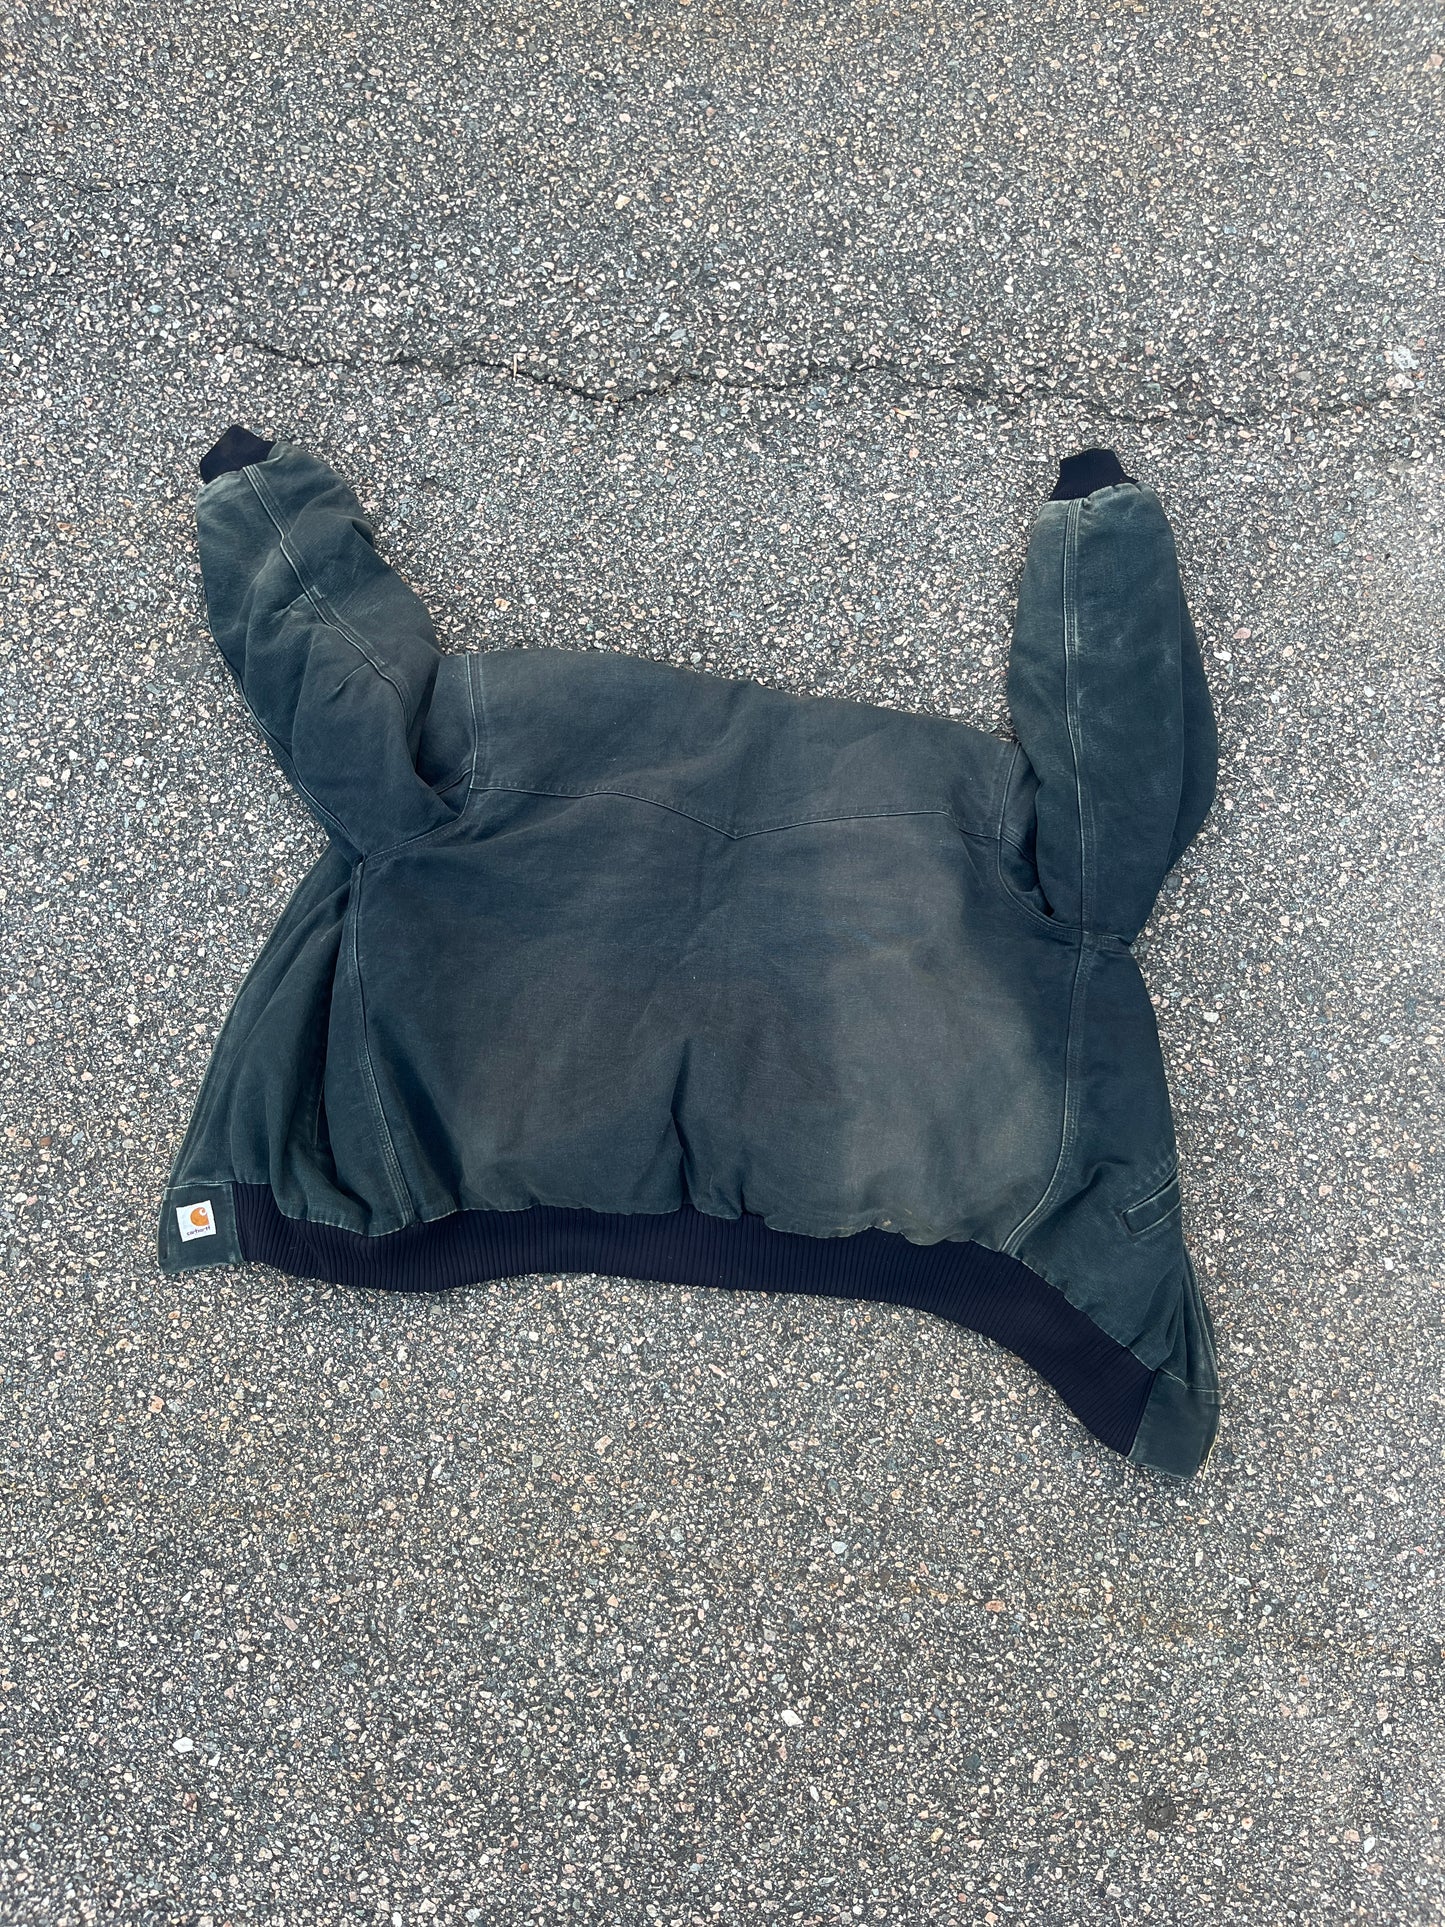 Faded Black Carhartt Santa Fe Jacket - XL Tall